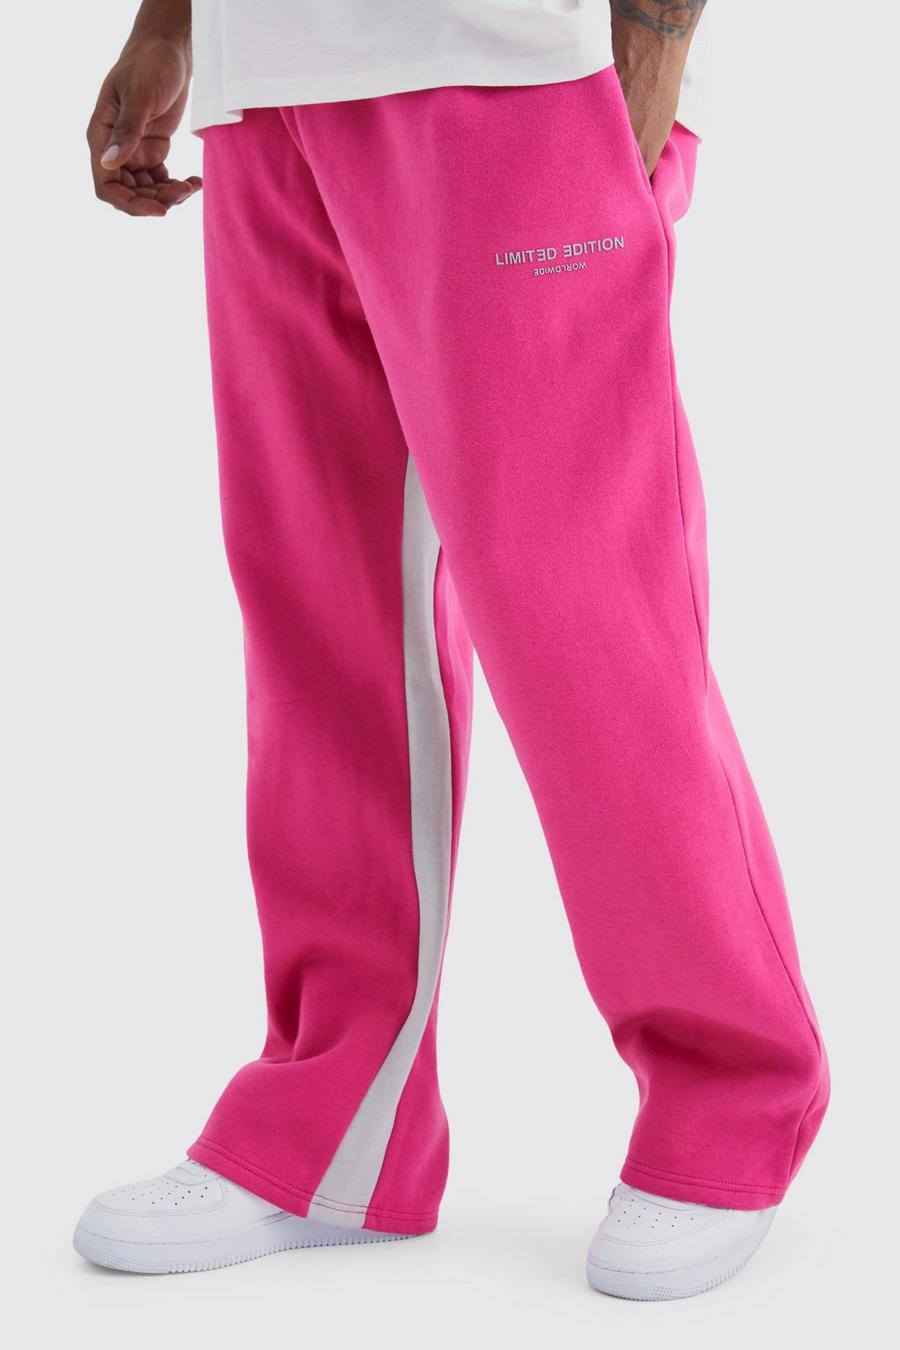 Pantaloni tuta Plus Size Regular Fit Limited con inserti, Bright pink